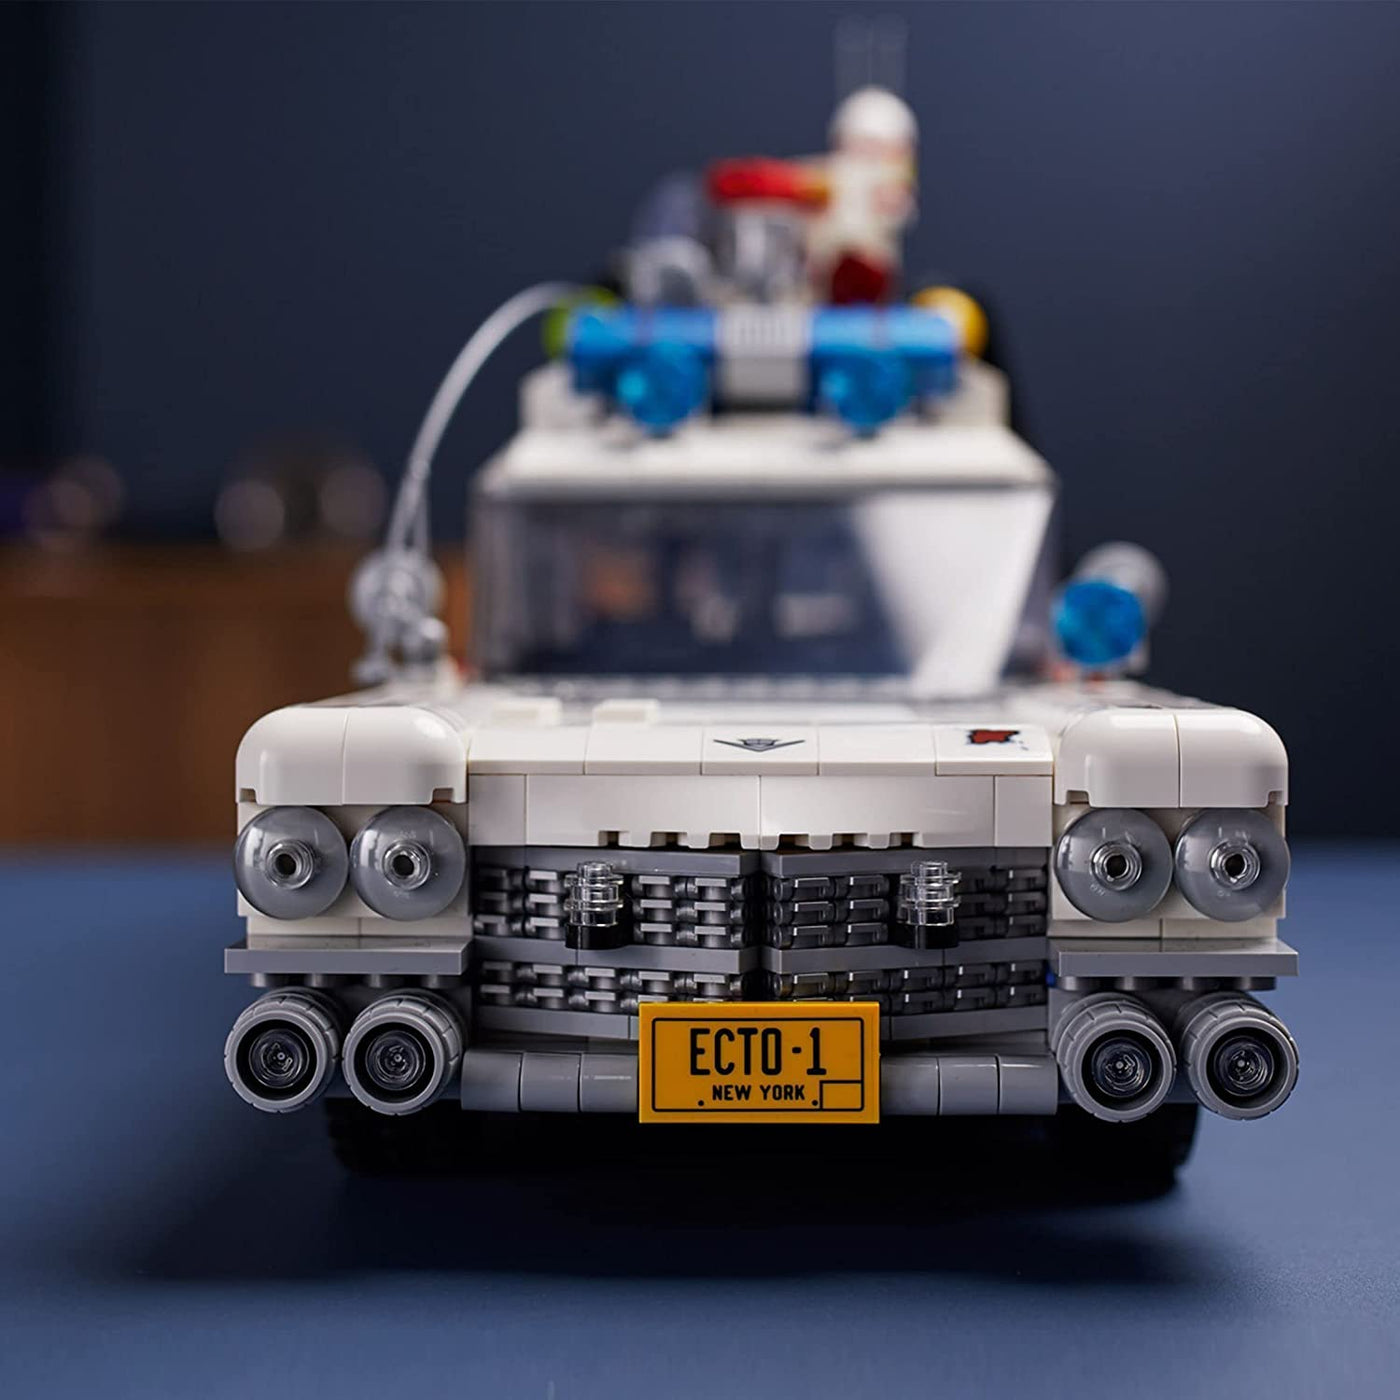 Ghostbusters™ ECTO-1: 10274 Creator - 2352 PCS | LEGO®